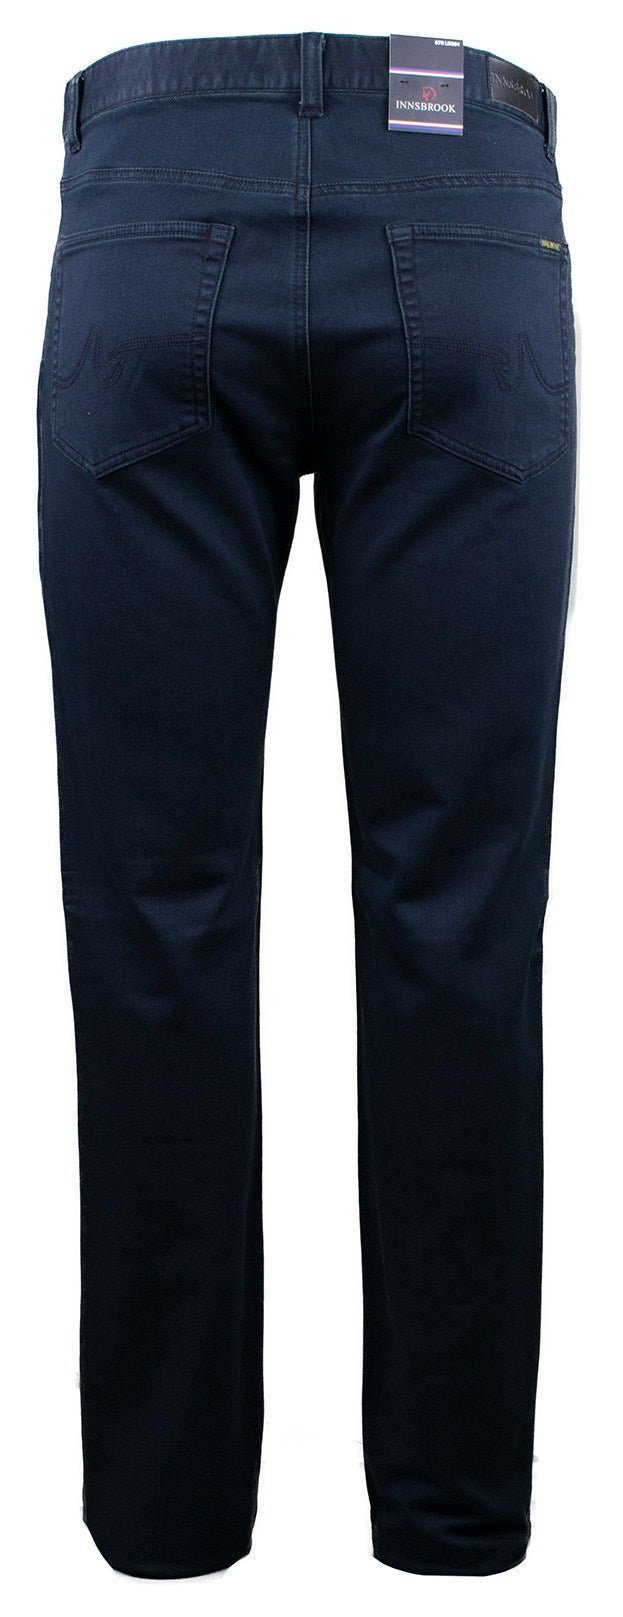 Innsbrook FYH323 Solden Jeans - Thomson's Suits Ltd - Indigo - 84 - 38744